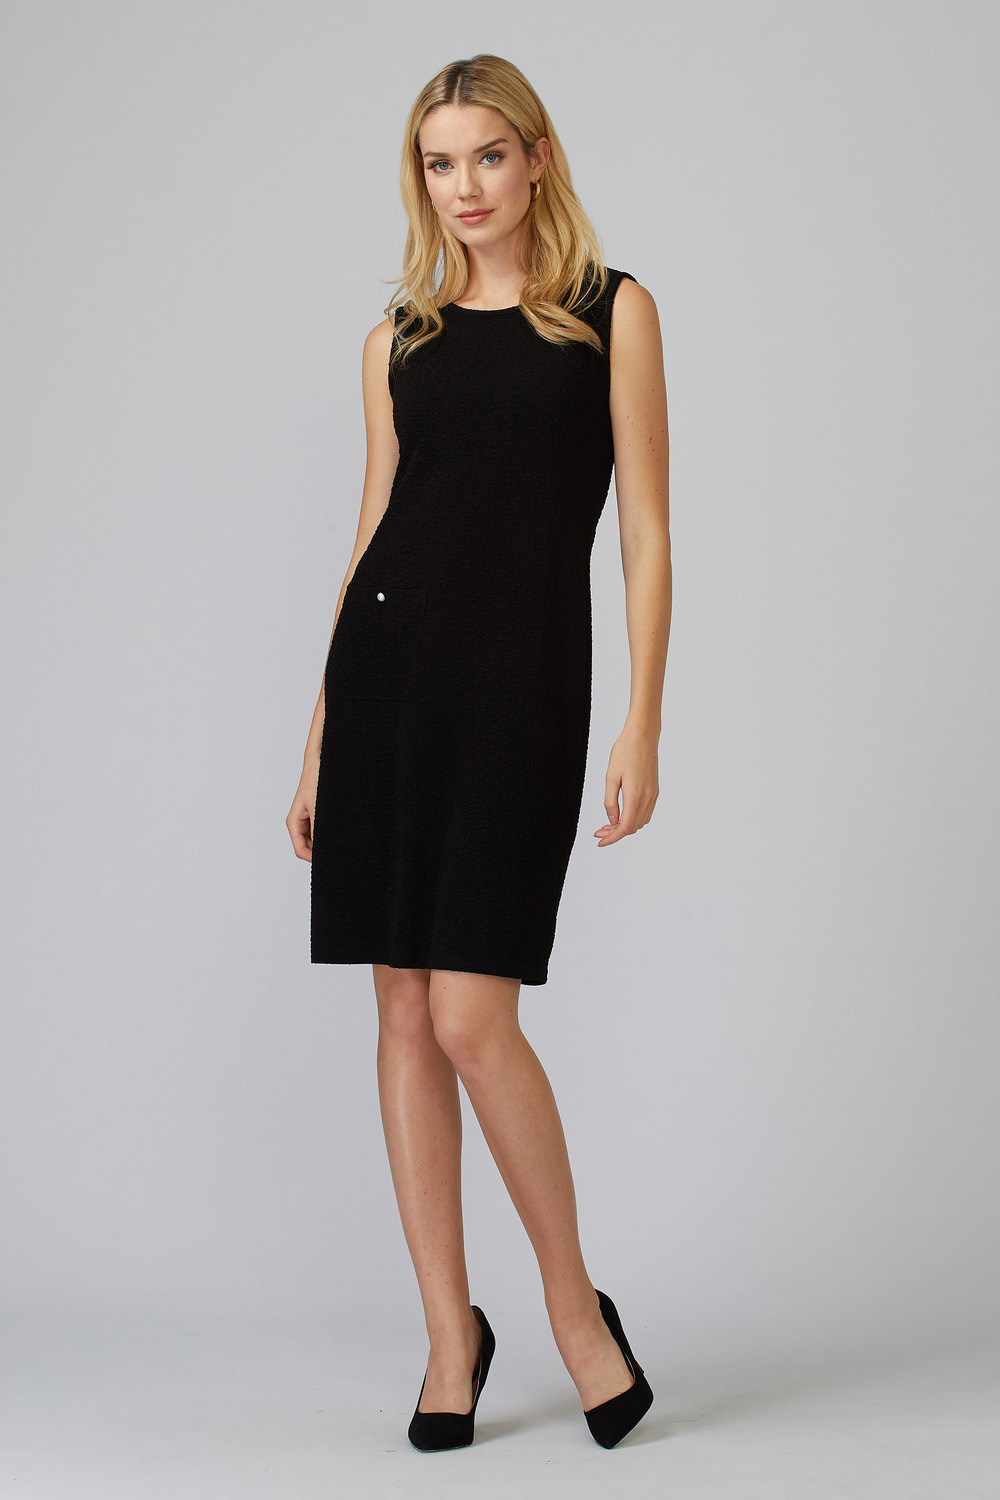 Joseph Ribkoff Dress Style 201213. Black